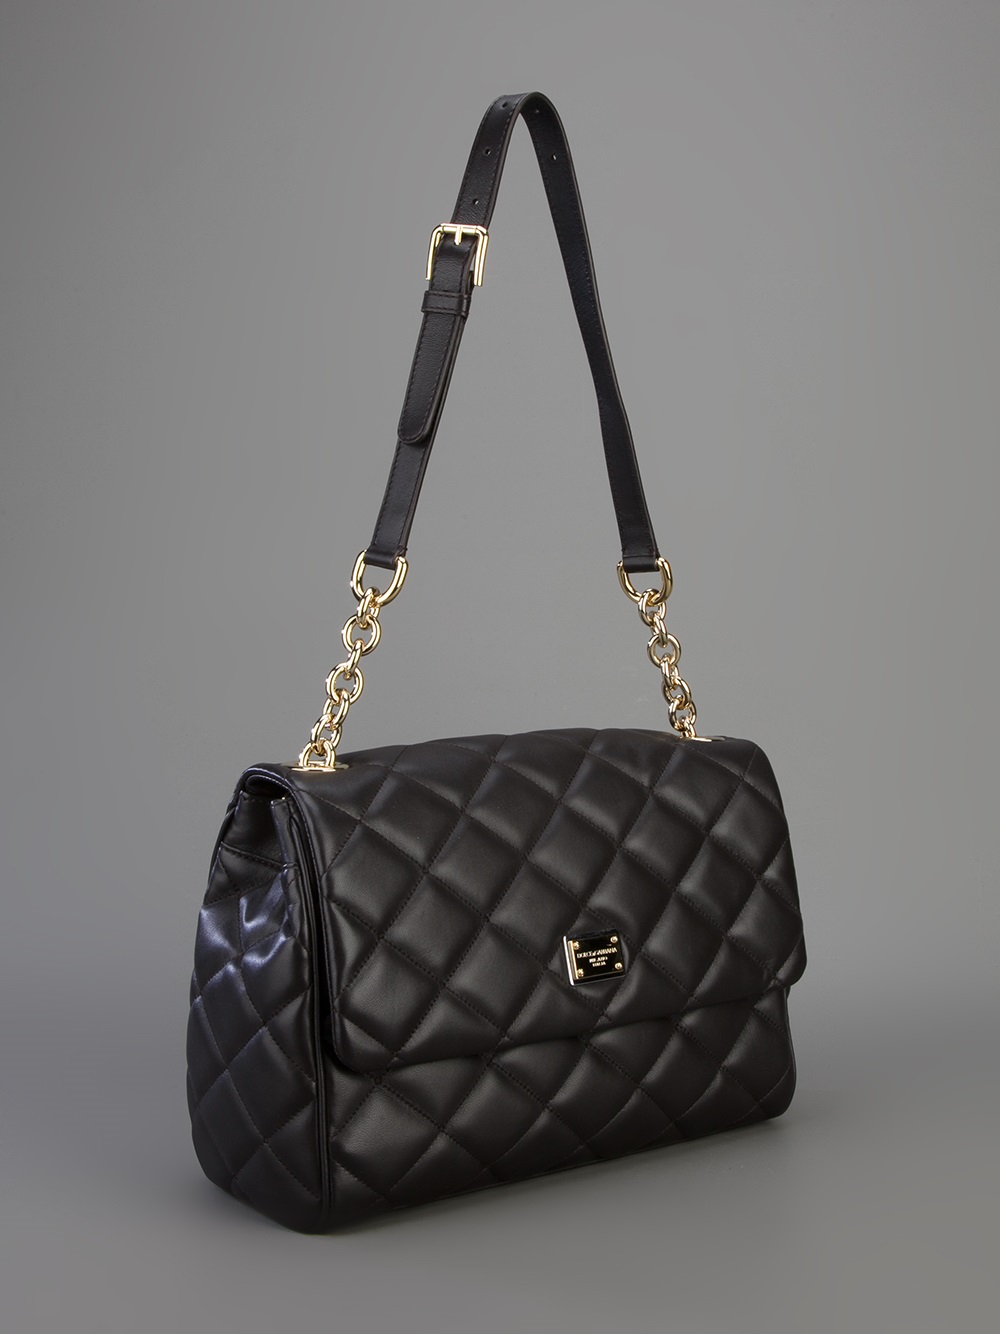 Dolce & Gabbana Quilted Leather Shoulder Bag in Brown (Black) - Lyst